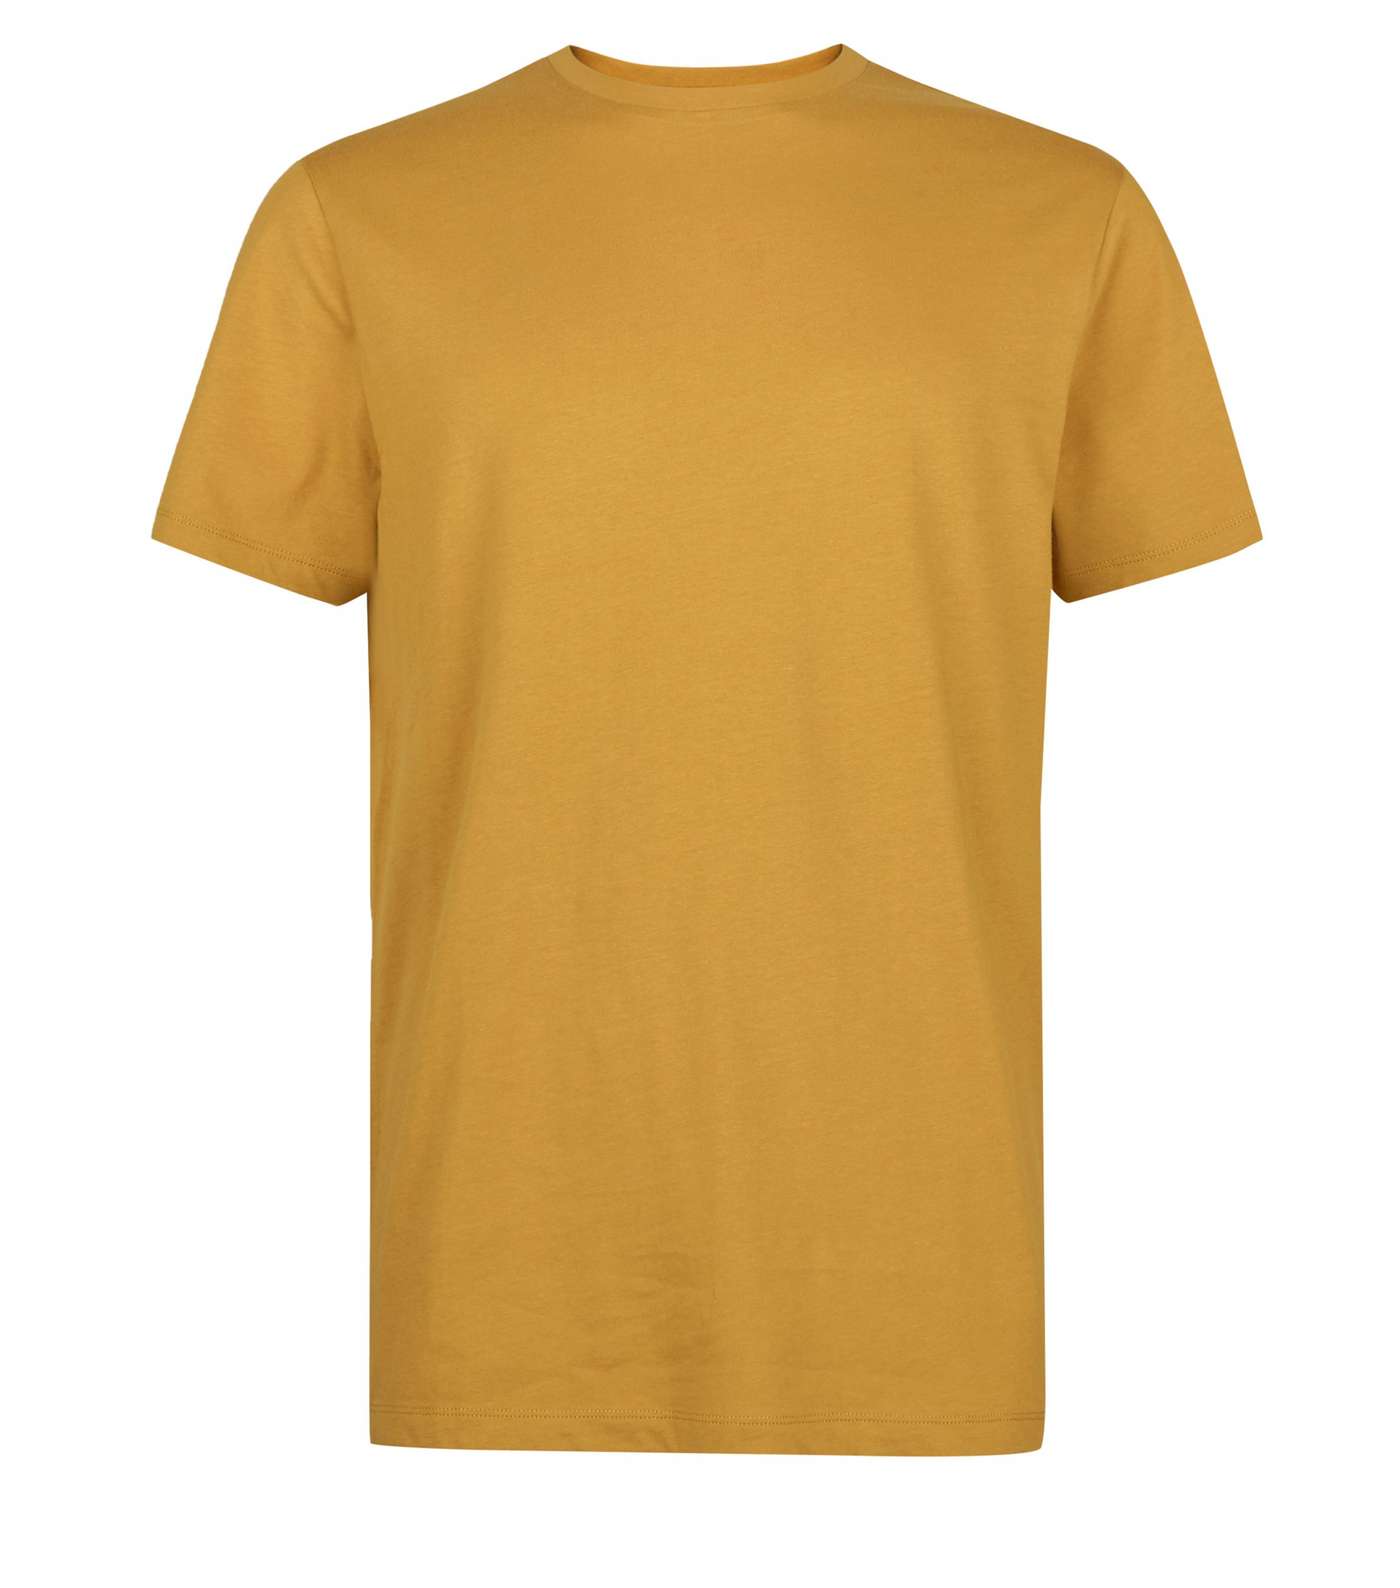 Bright Orange Crew Neck T-Shirt Image 4